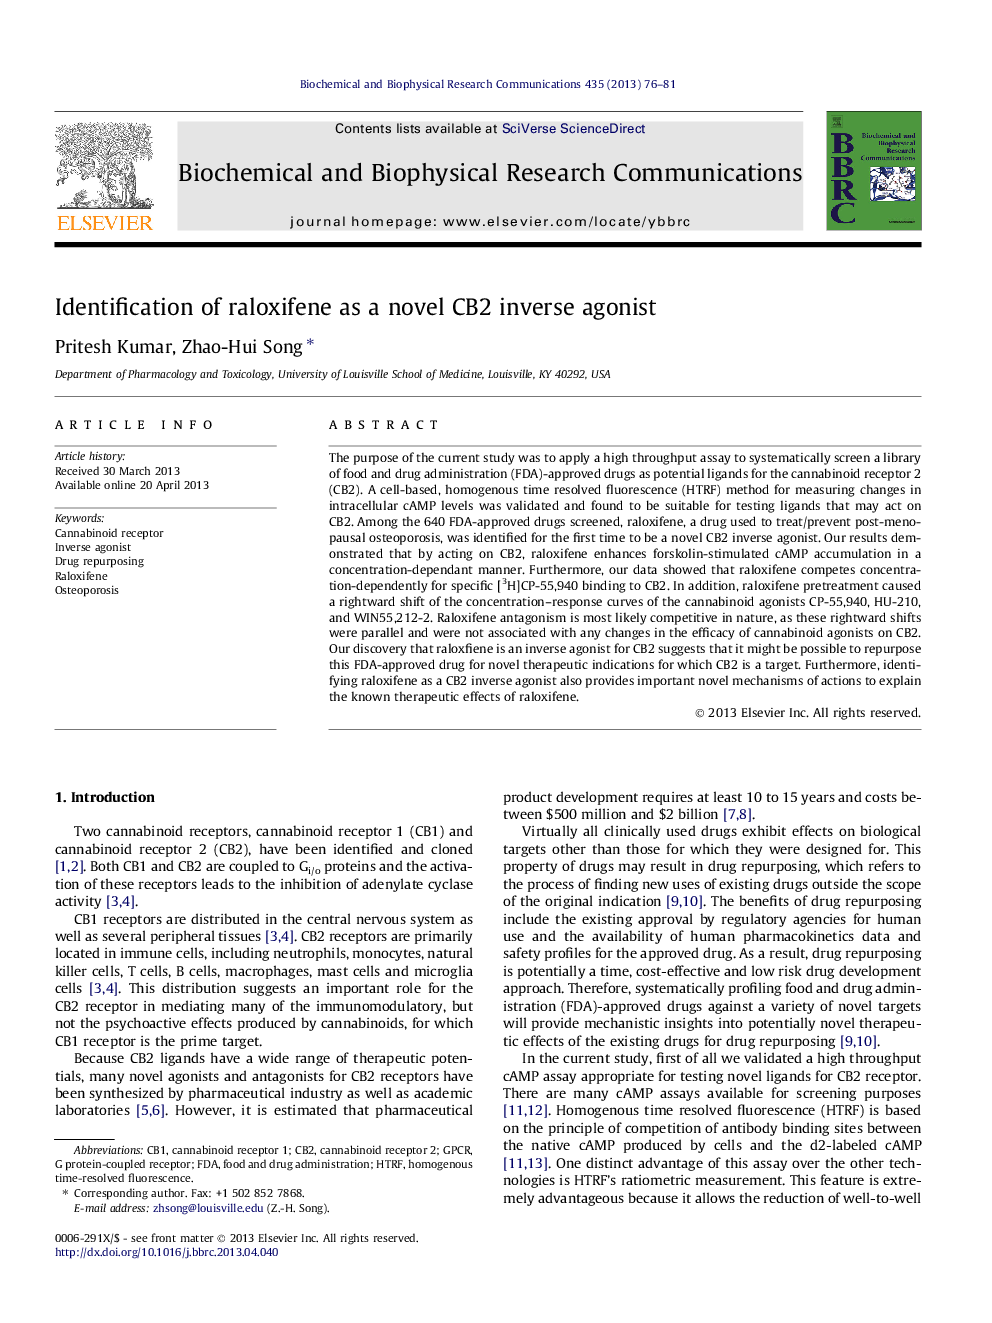 Identification of raloxifene as a novel CB2 inverse agonist